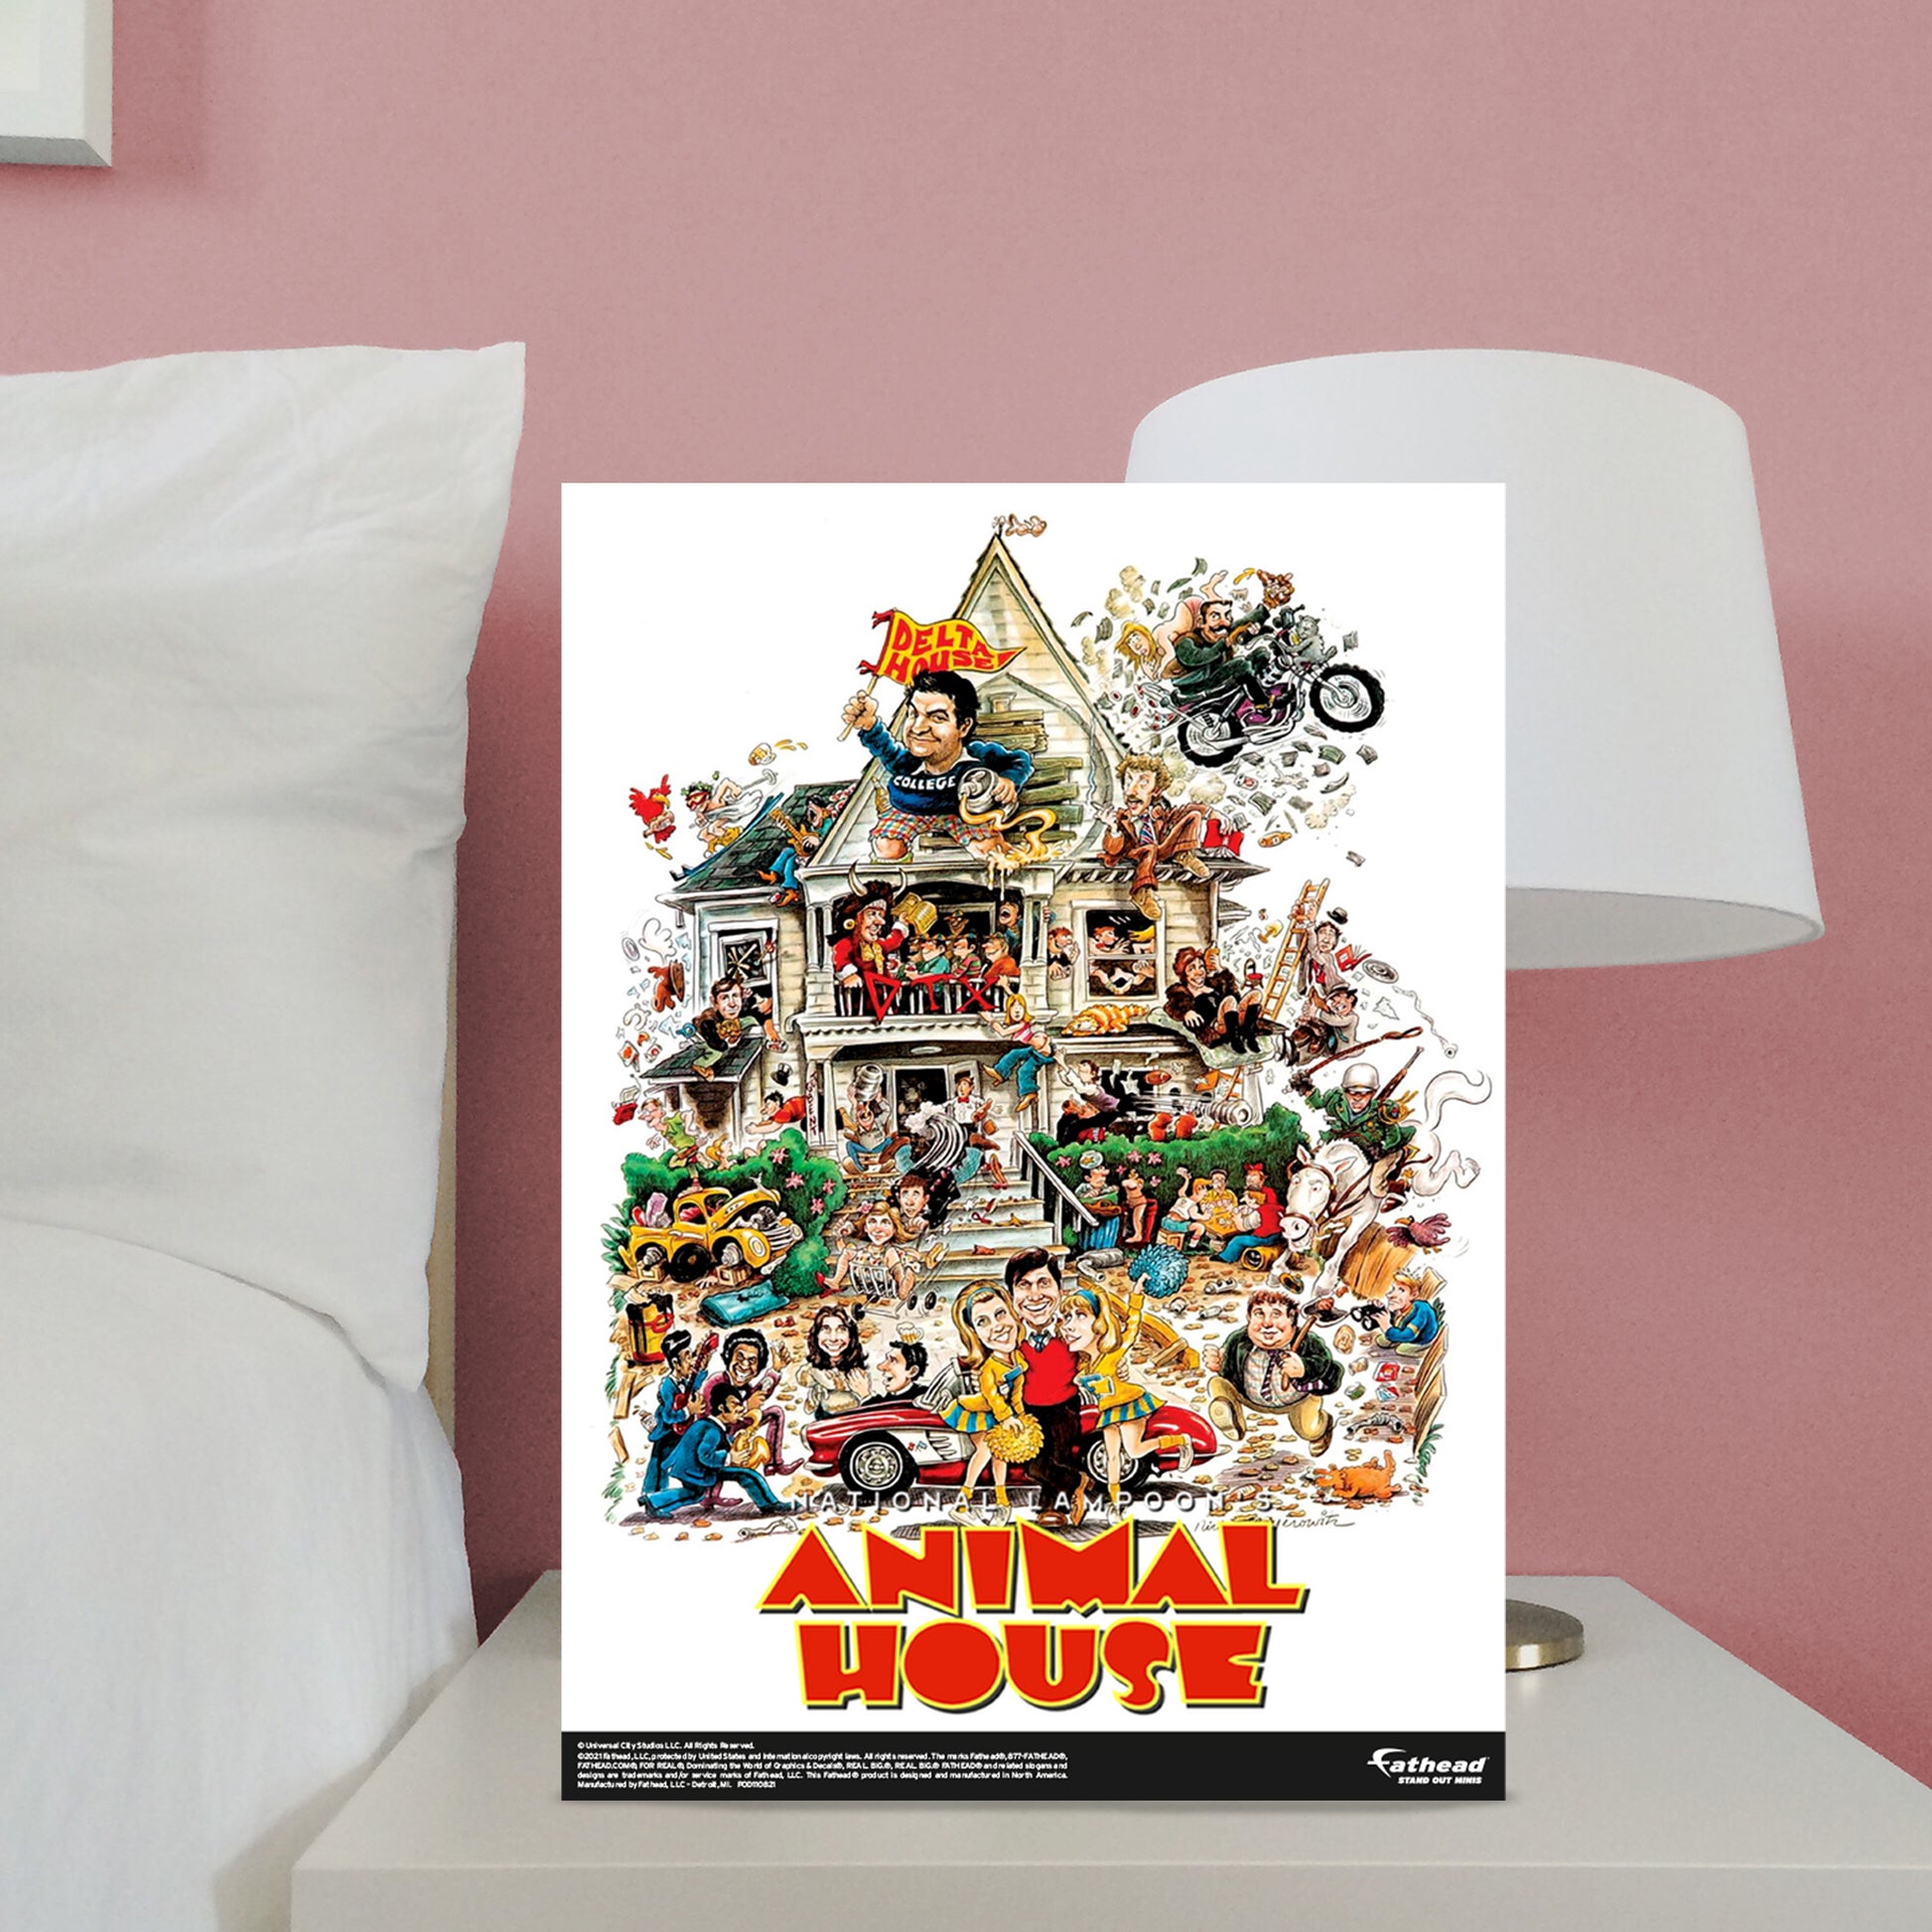 Animal Cartoon Wall Sticker (Code LWS-14)